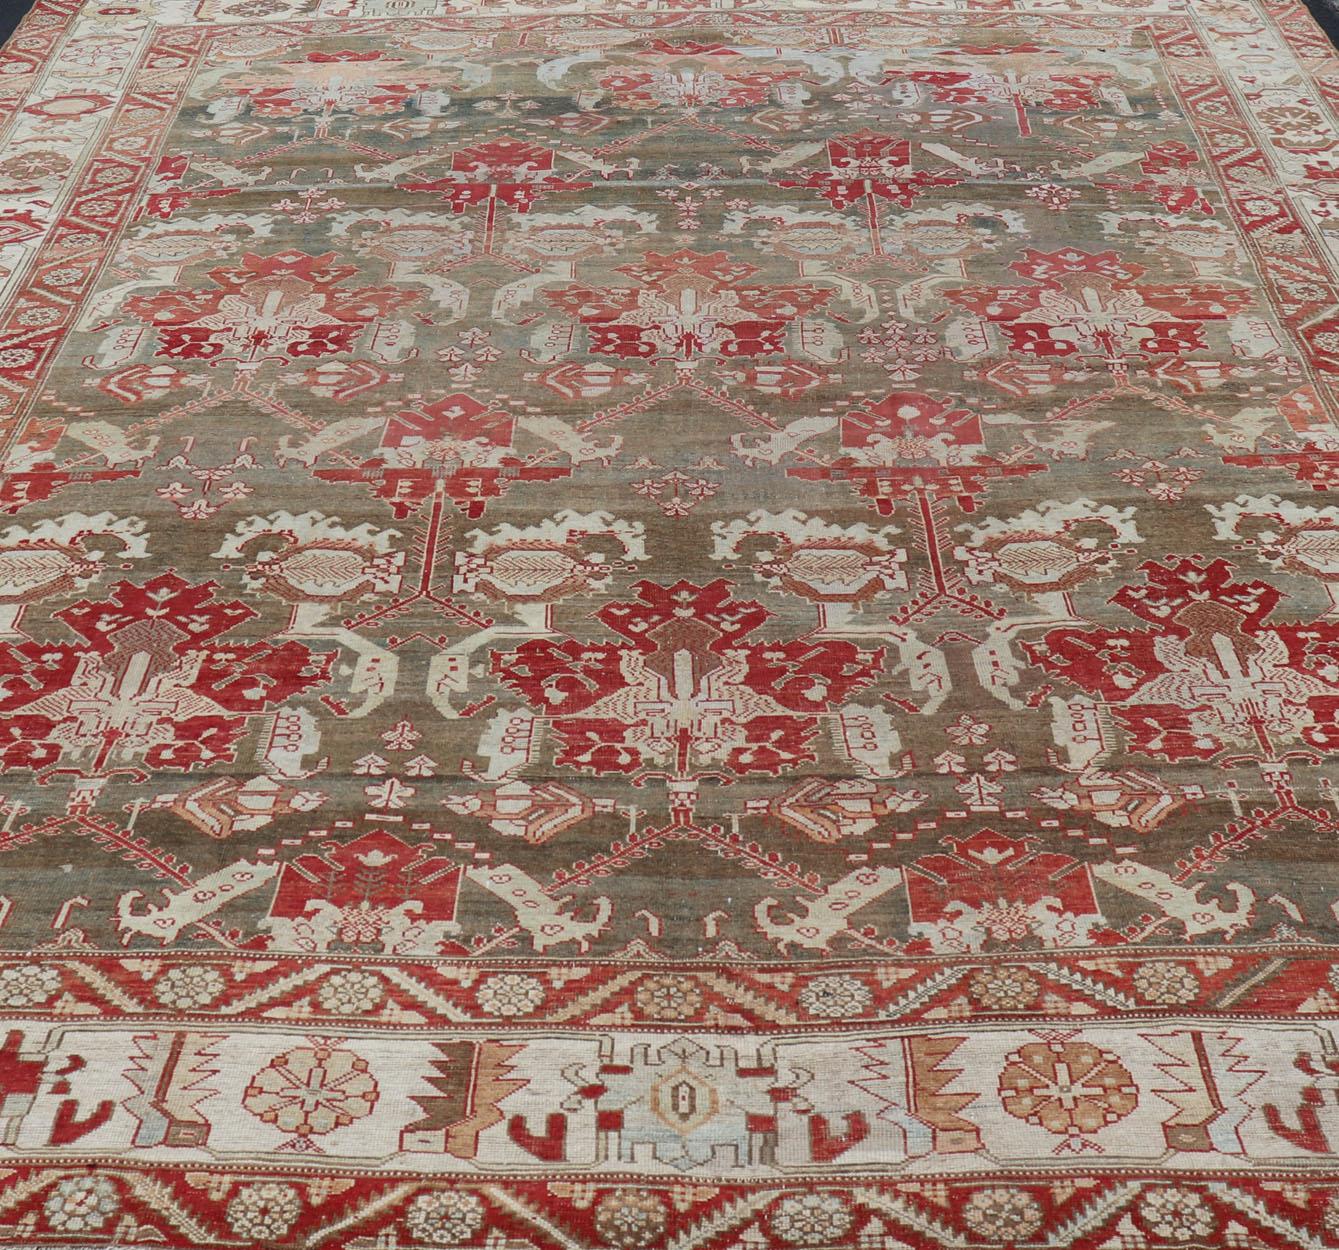 Antique Persian Large Scale Tribal Design Bakhtiari Rug in Multi Colors In Good Condition For Sale In Atlanta, GA